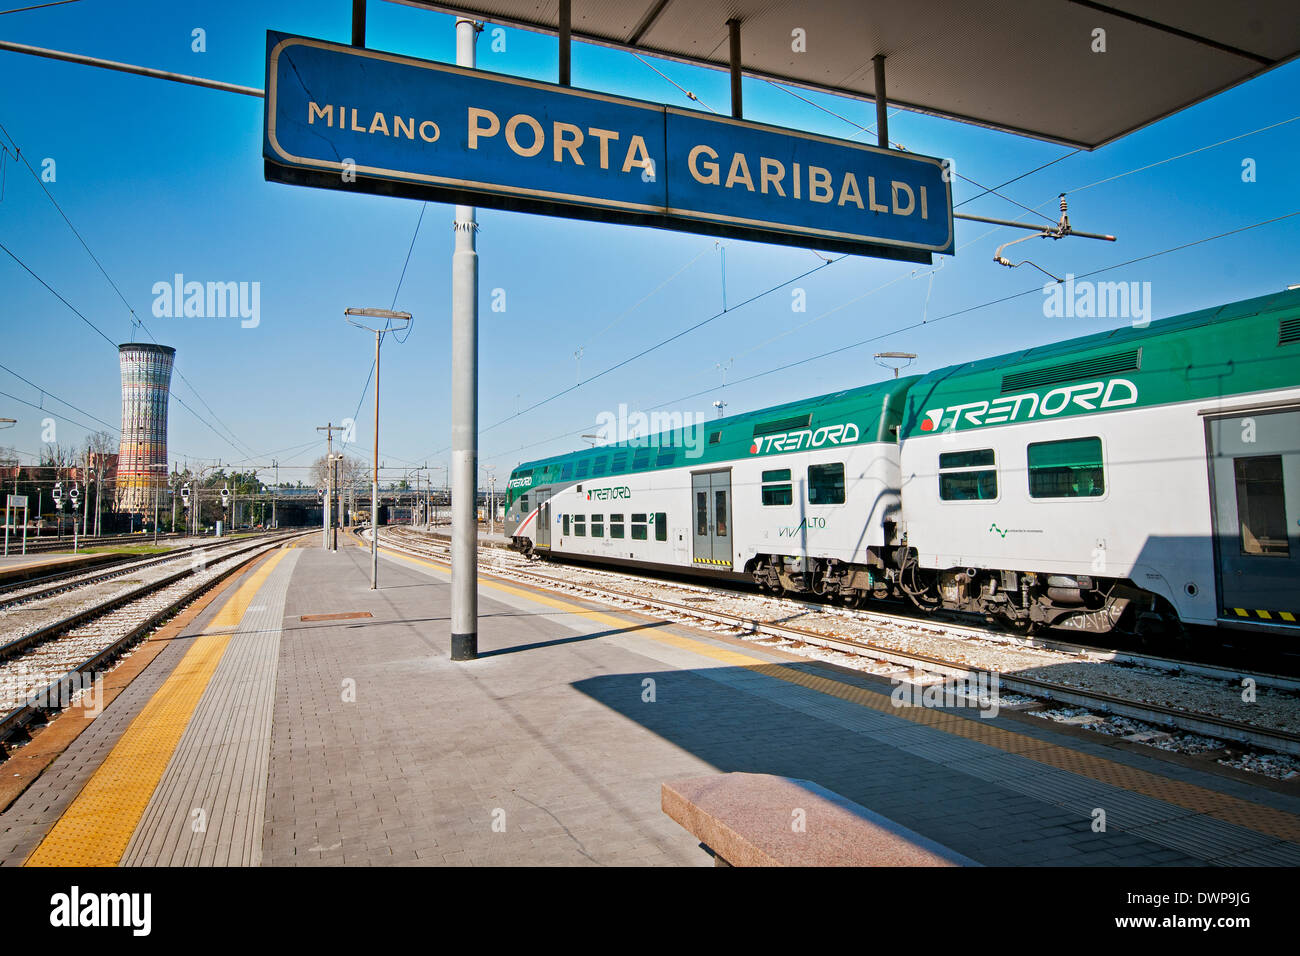 Italy, Milan, Porta Garibaldi railway station Stock Photo - Alamy